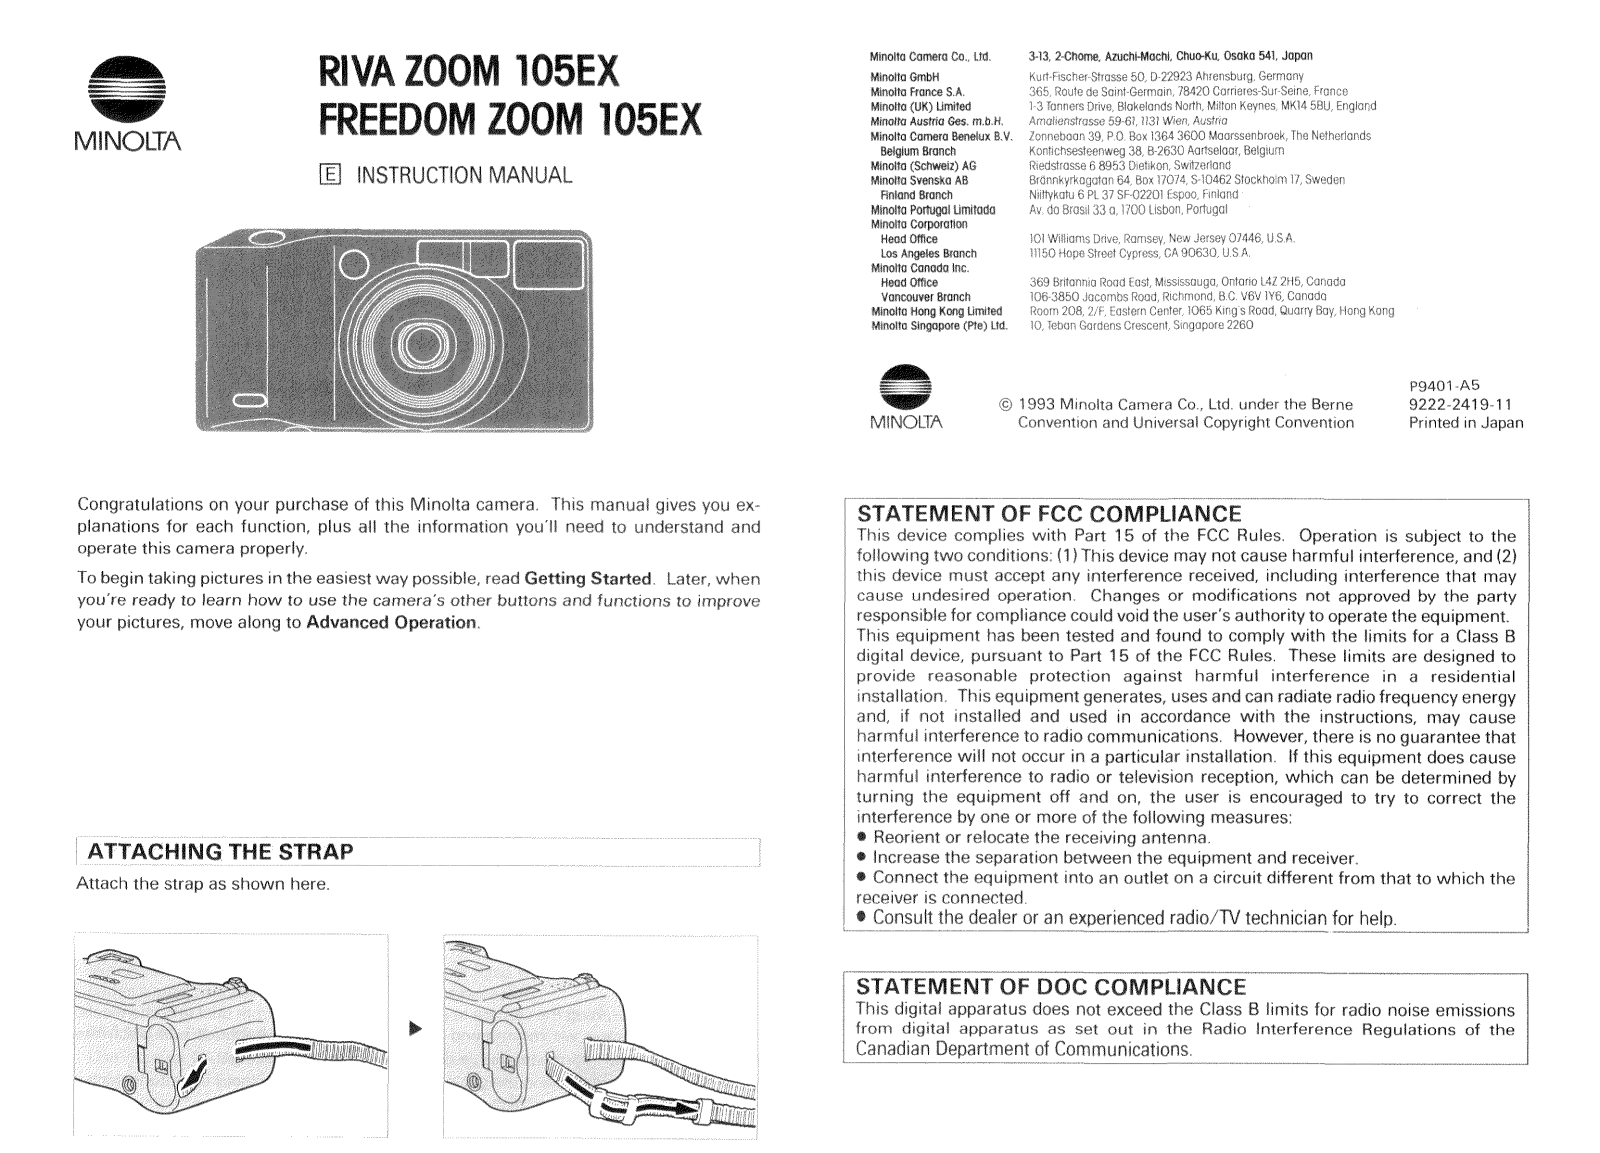 MINOLTA Freedom Zoom 105 EX, Riva Zoom 105 EX User Manual